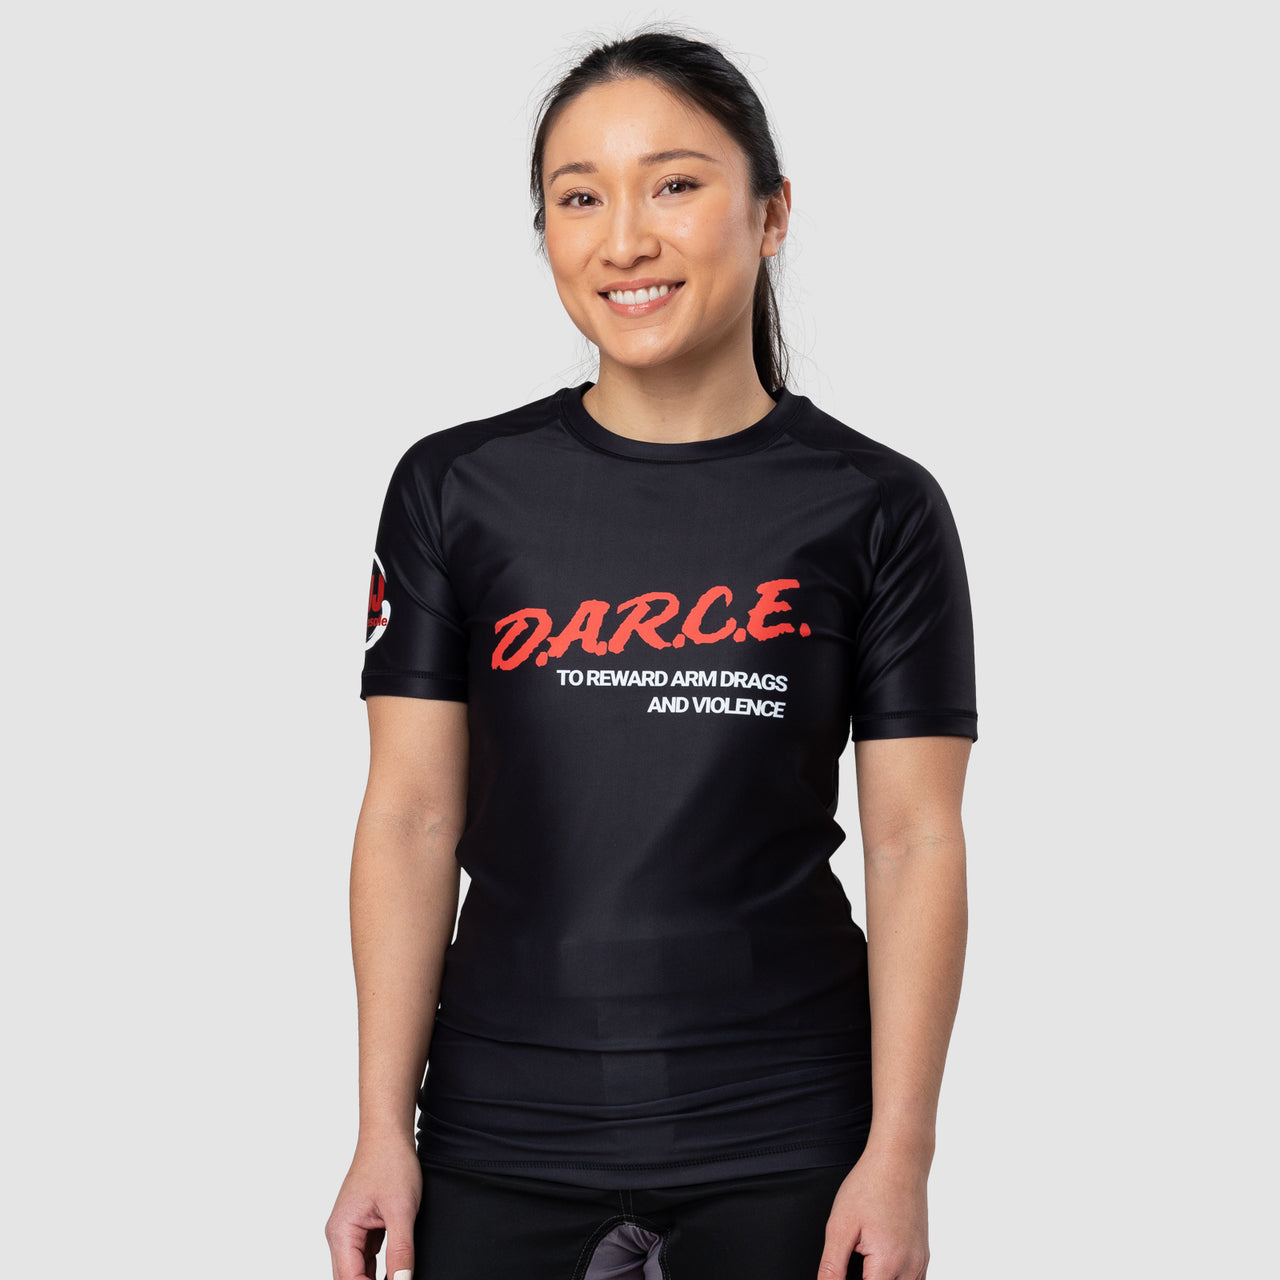 BJJ Wholesale "DARCE" Short Sleeve Women's Rash Guard